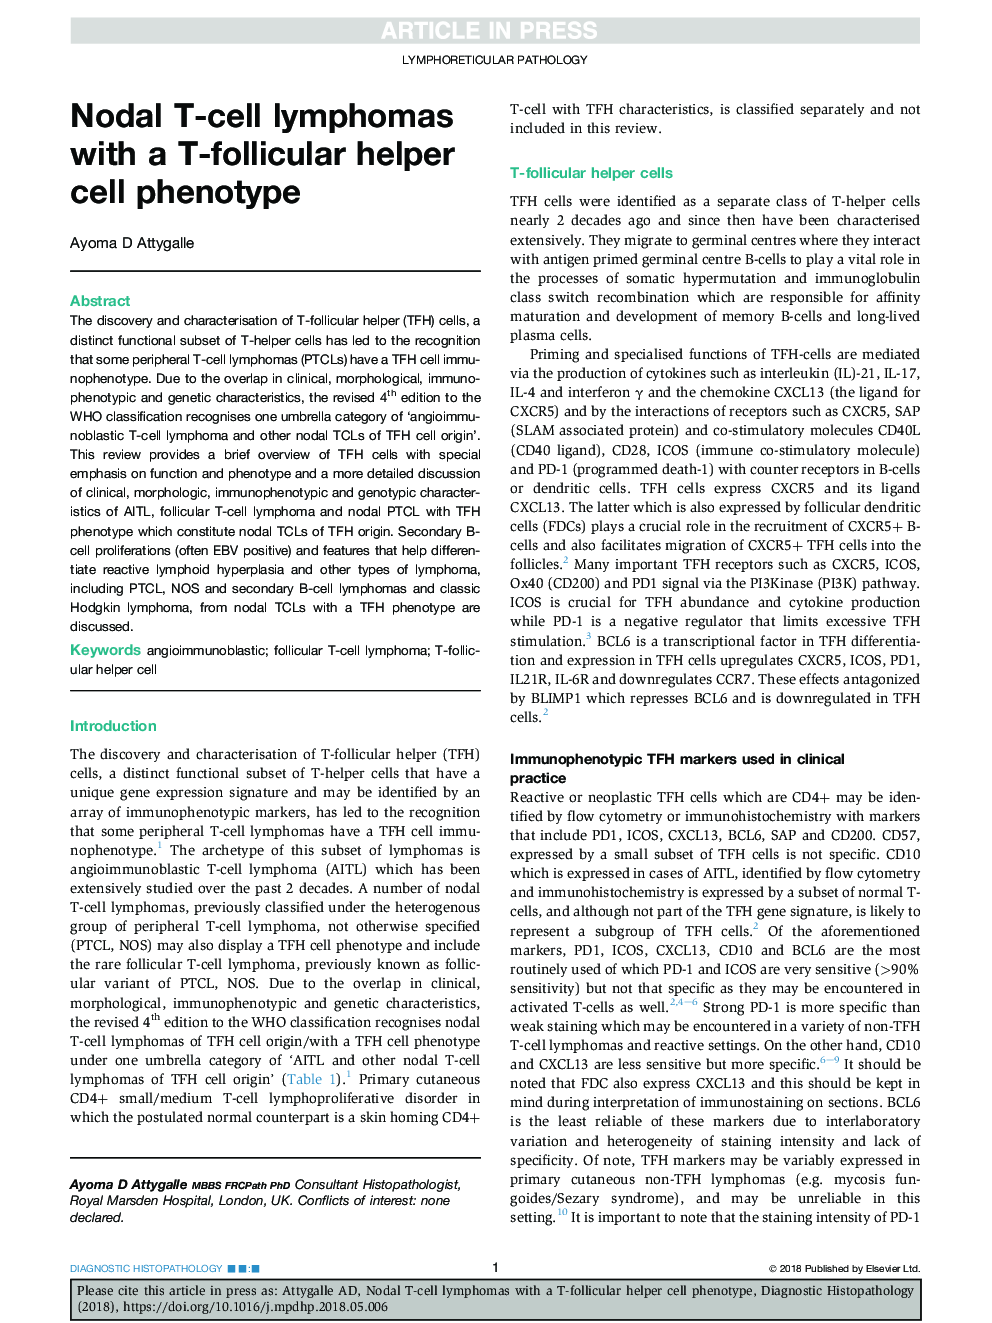 Nodal T-cell lymphomas with a T-follicular helper cell phenotype